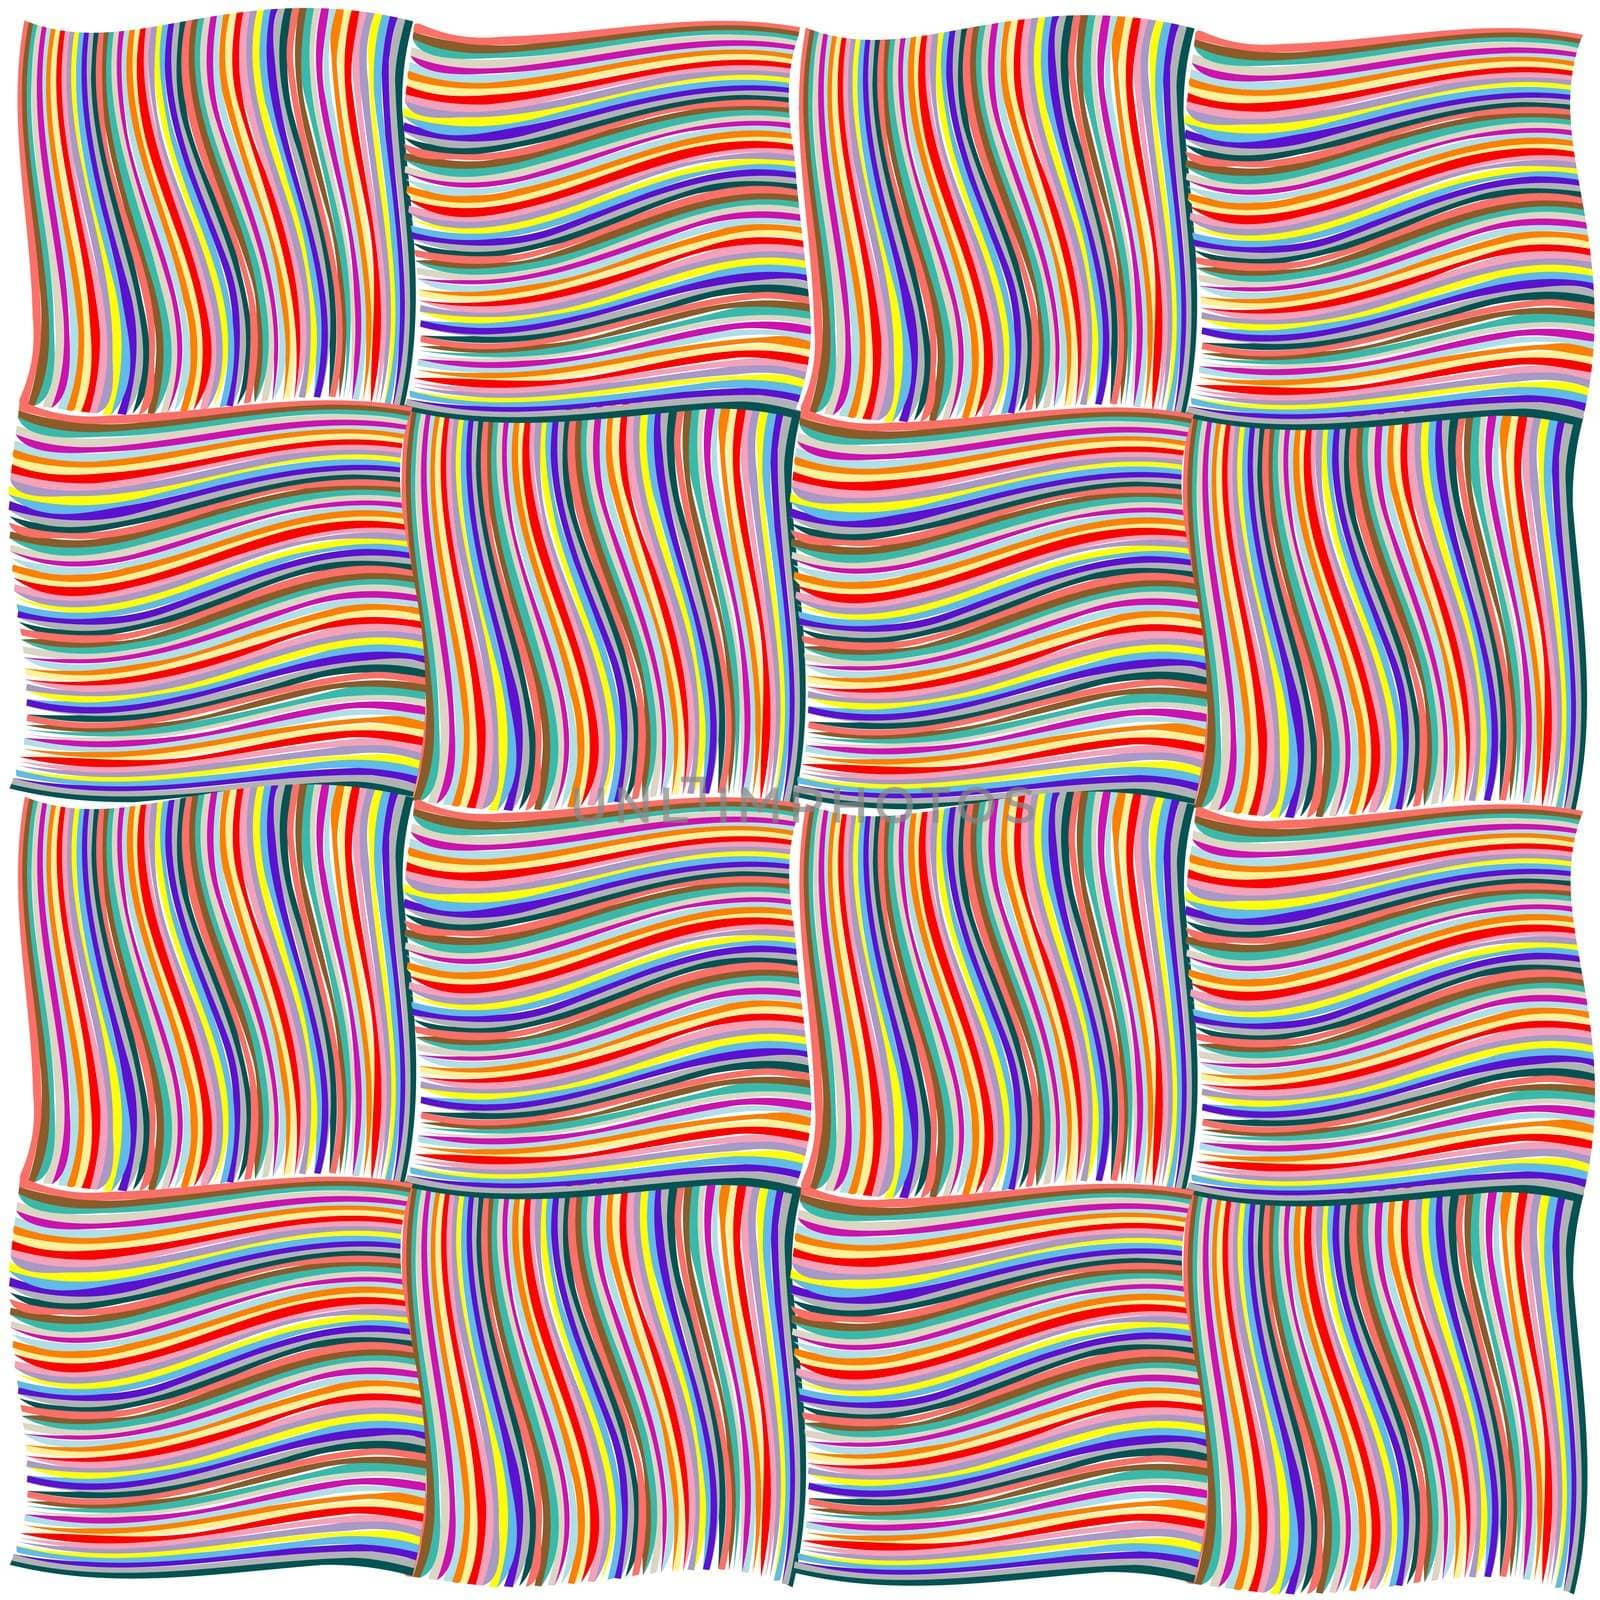 stripes mix extended by robertosch